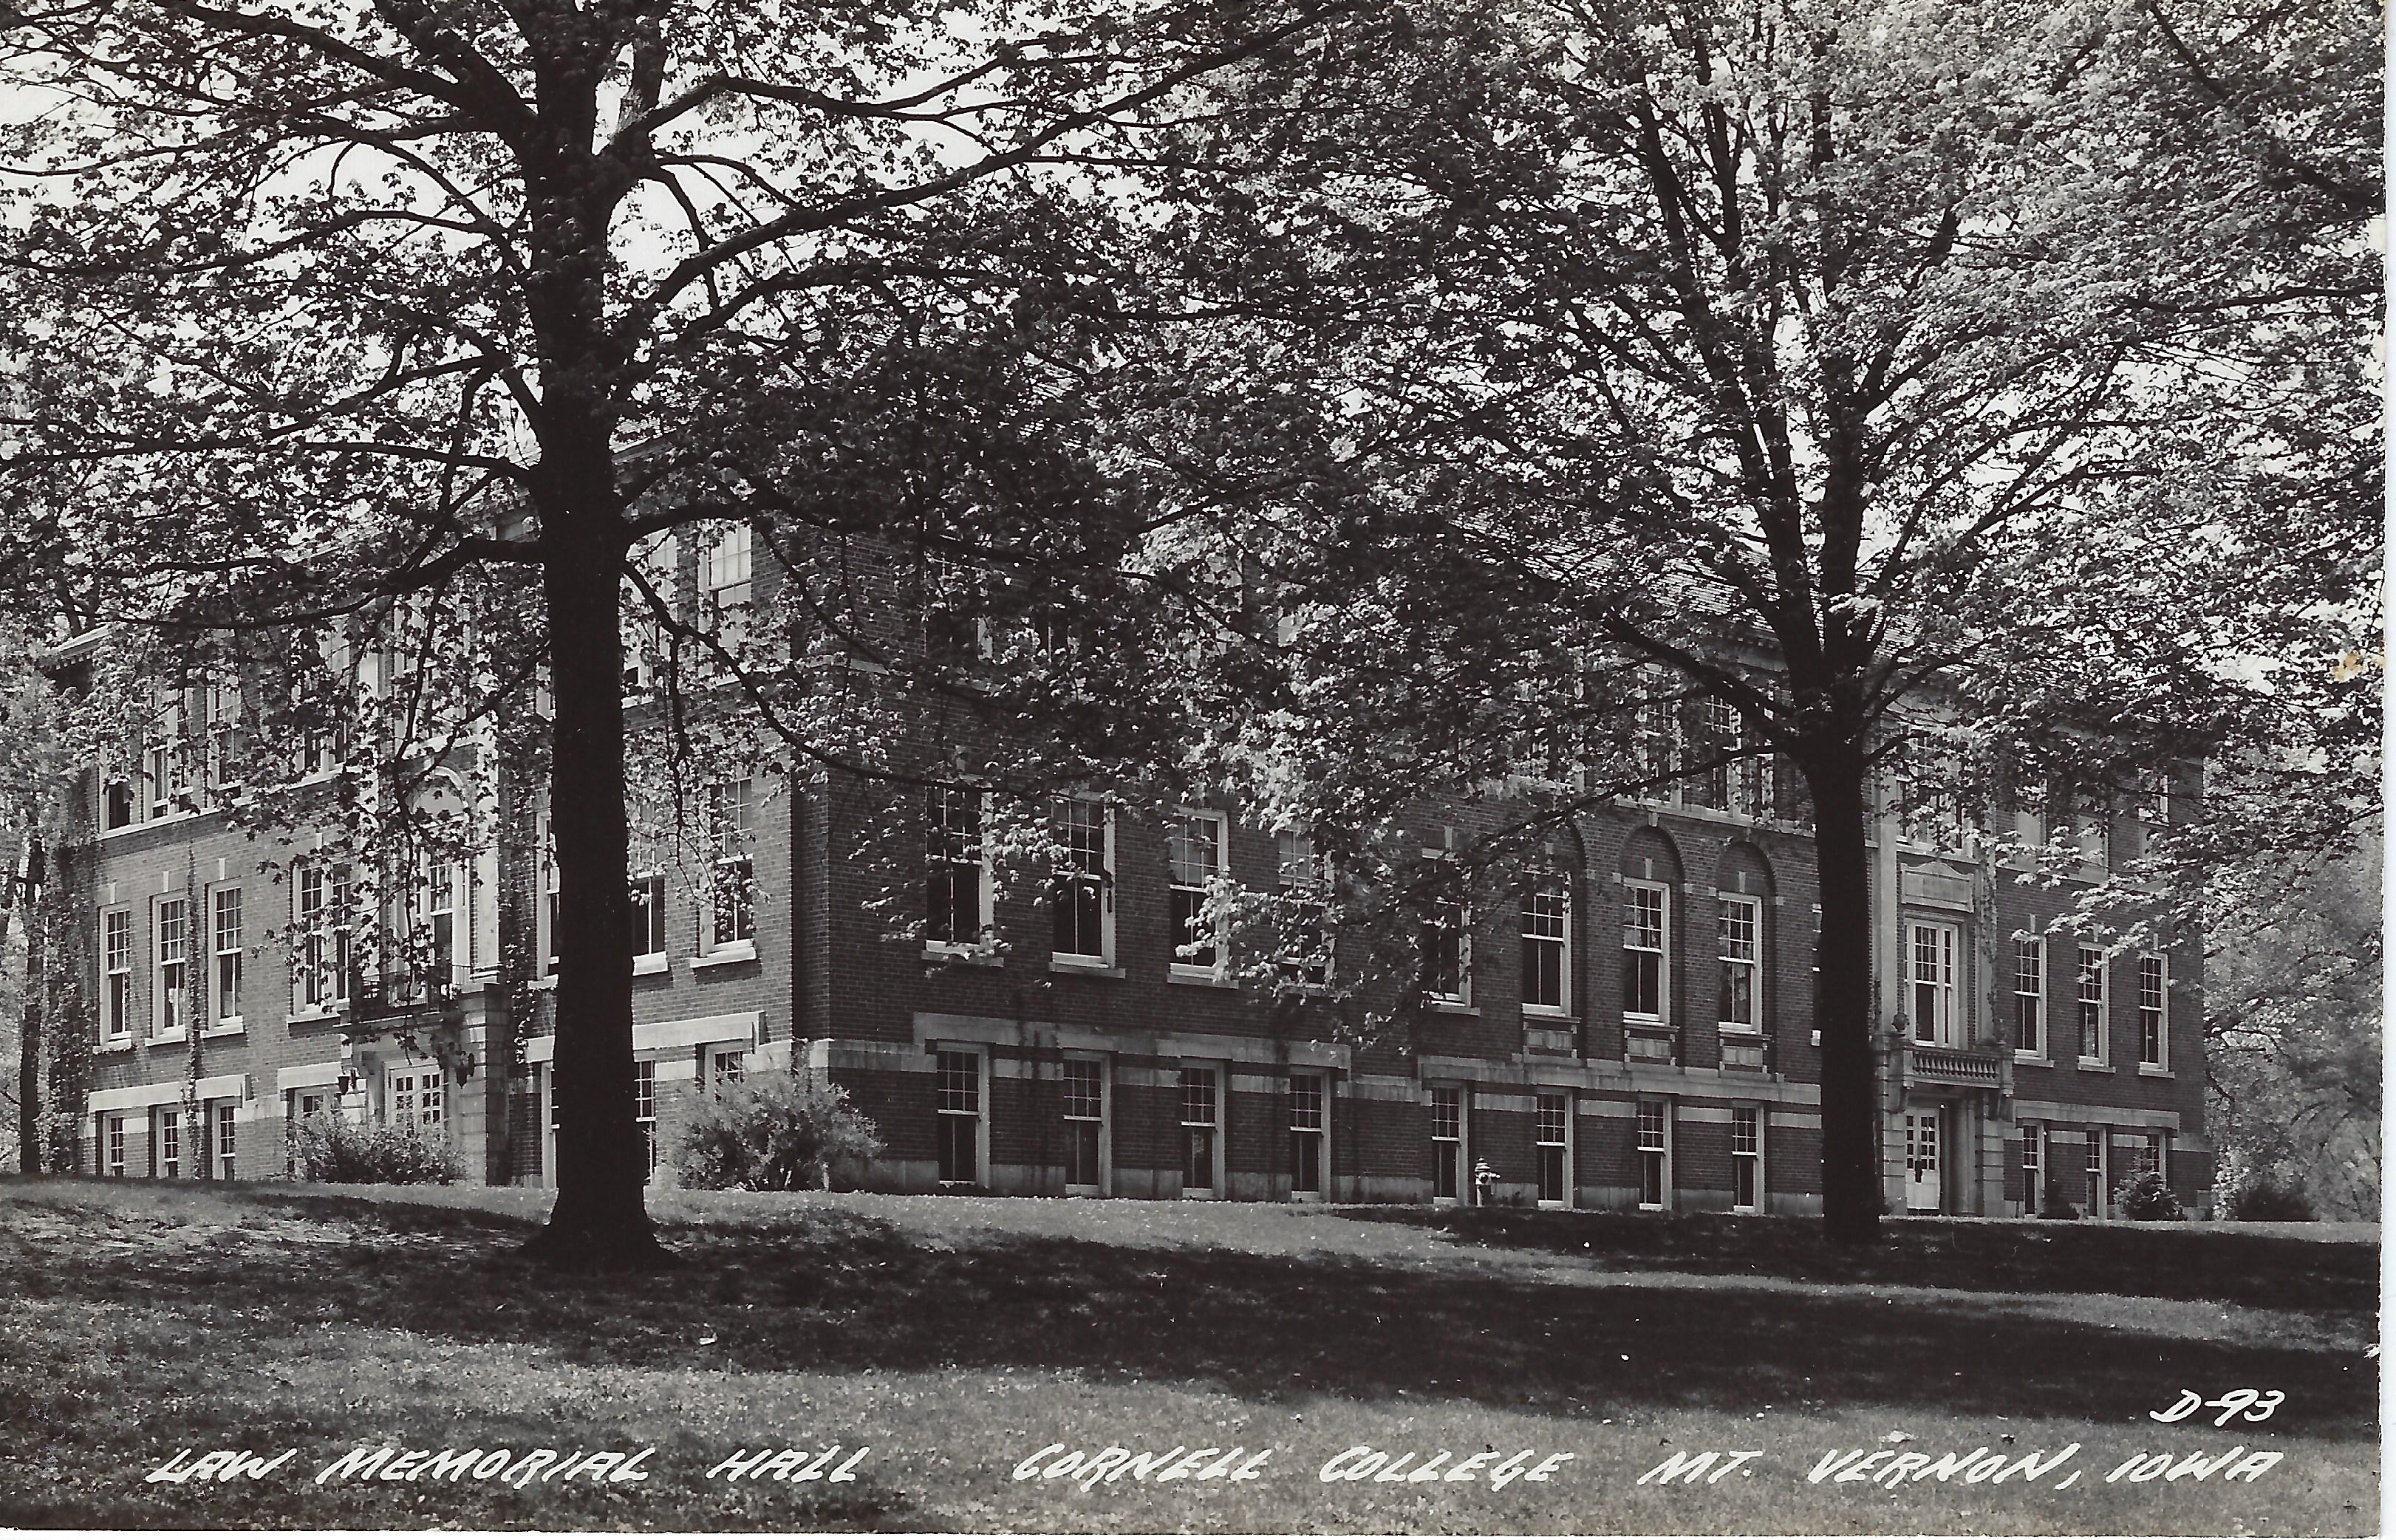 Photo of Law Hall postcard